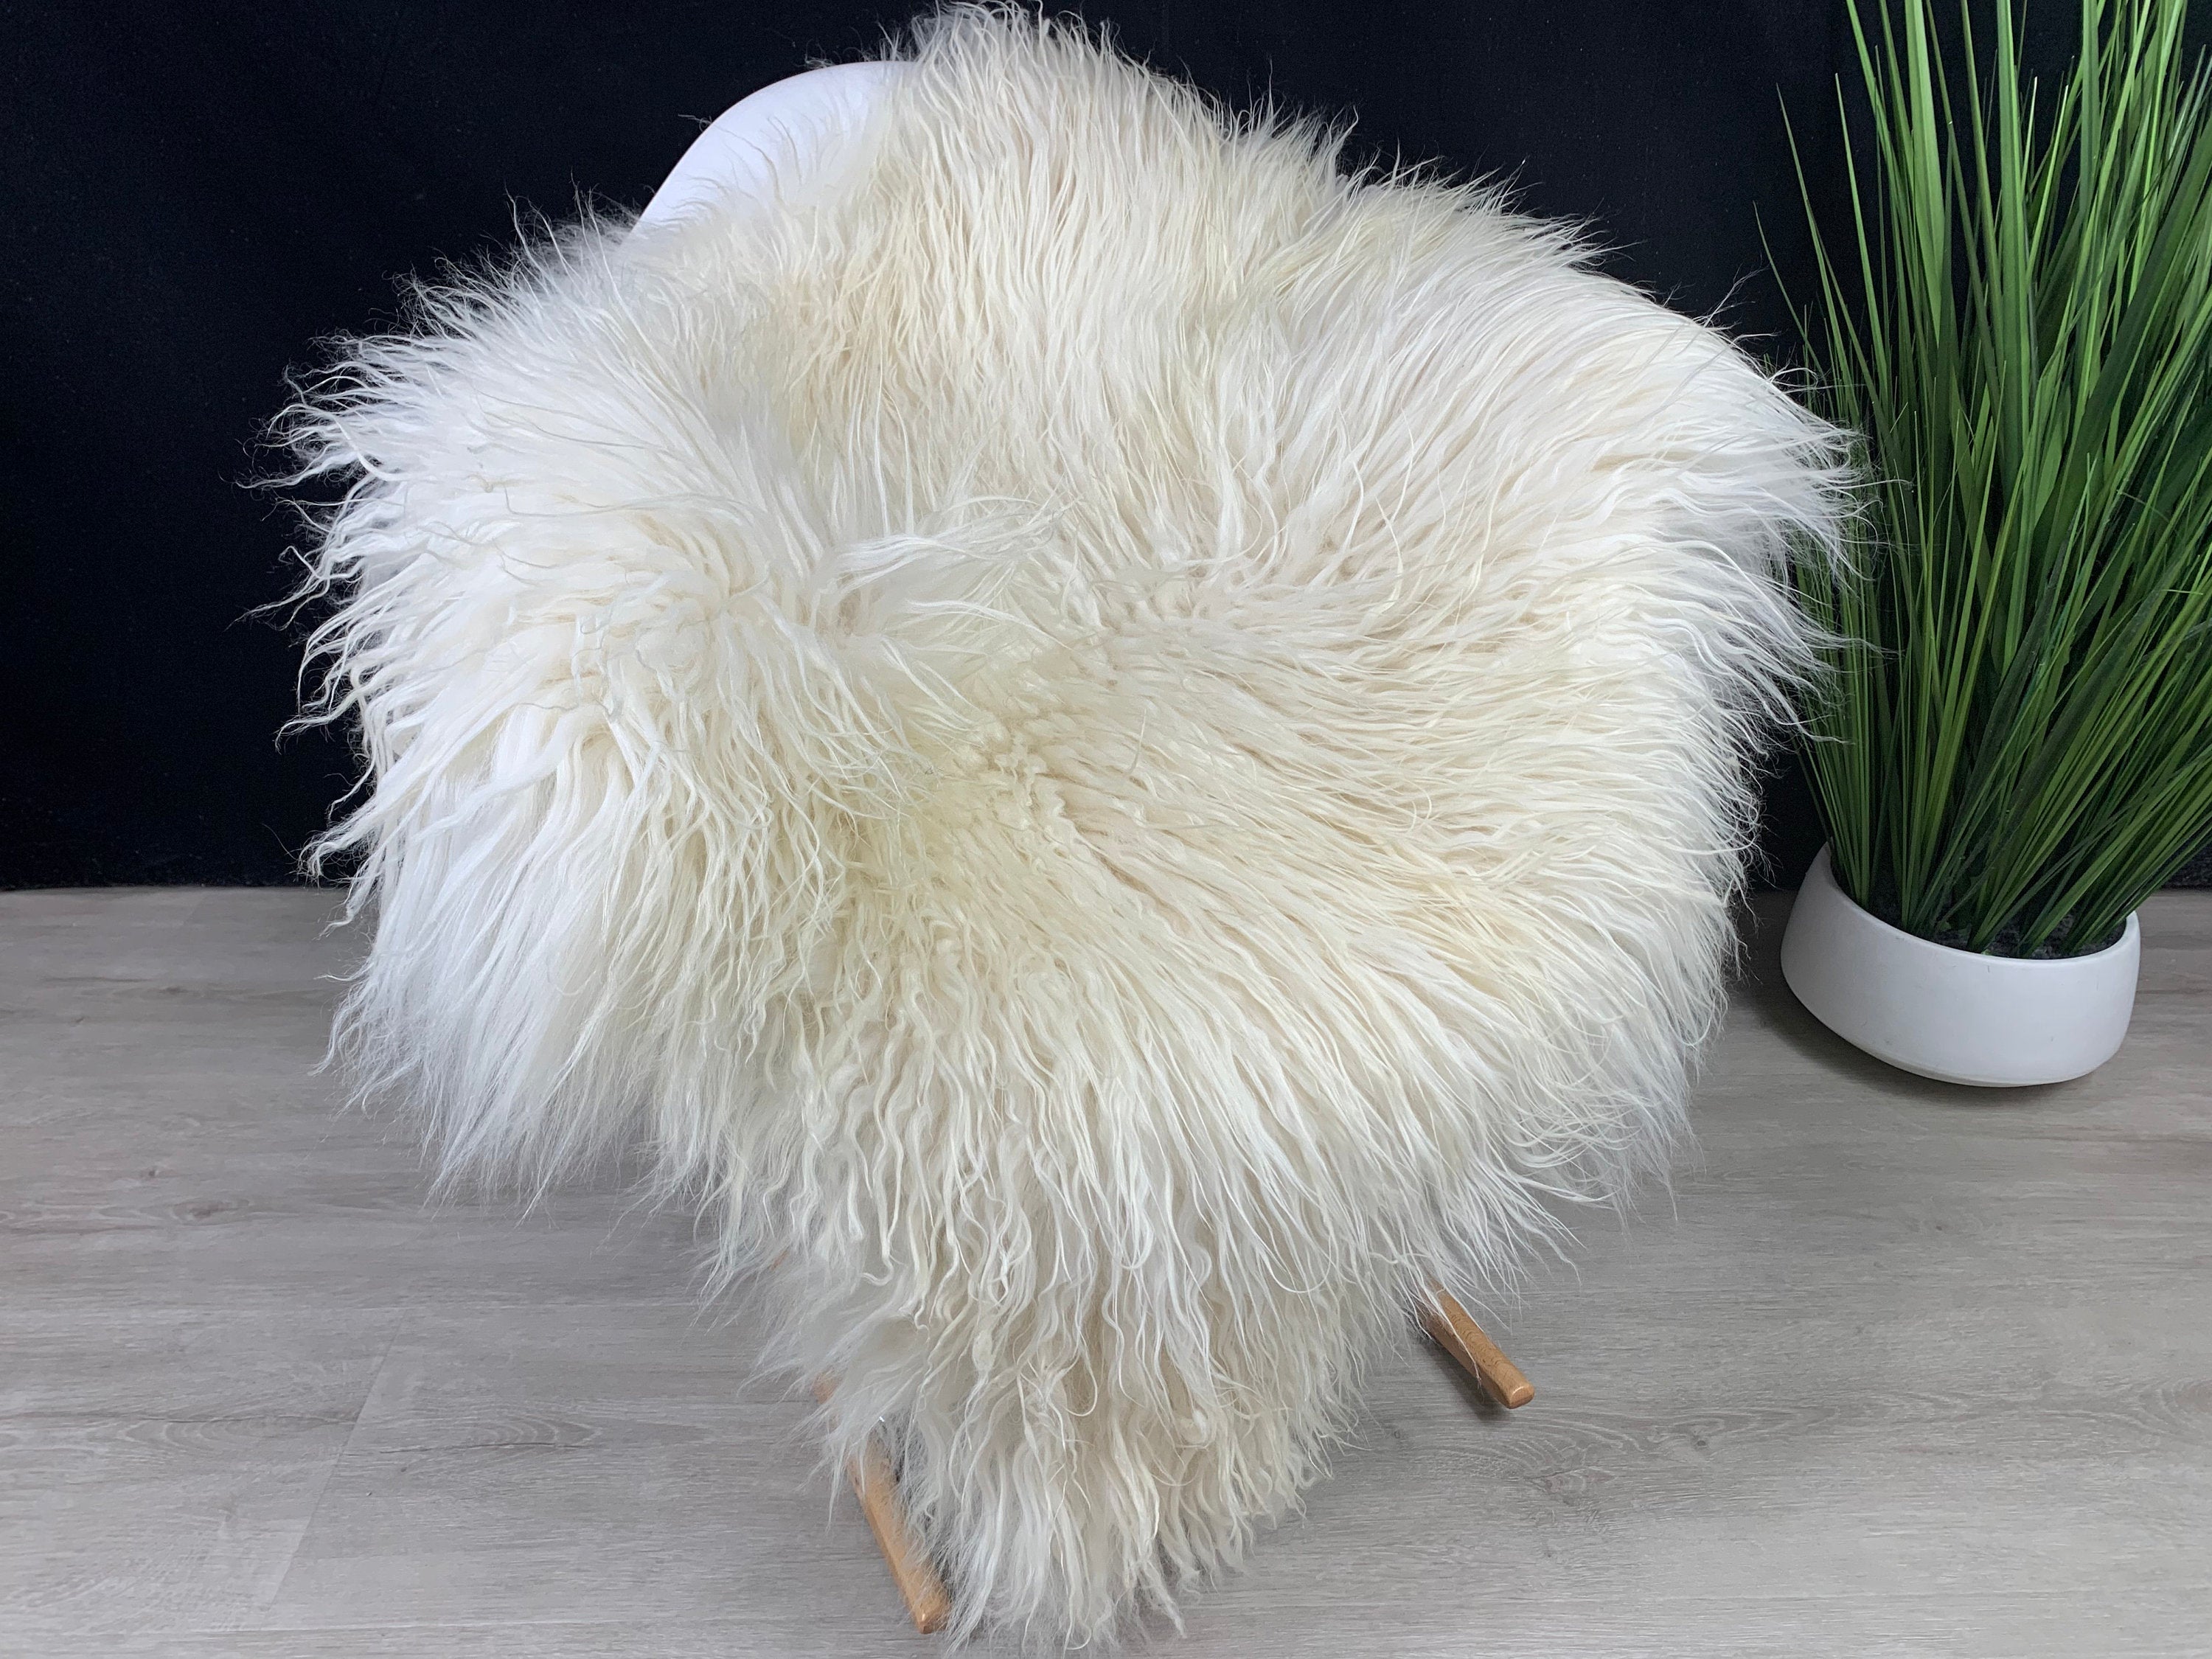 Curly White Iceland Sheepskin Rug * Genuine Sheepskin White Rug Fur Throw * Natural Animal Hide Pelt * Sheepskin Seat Cover